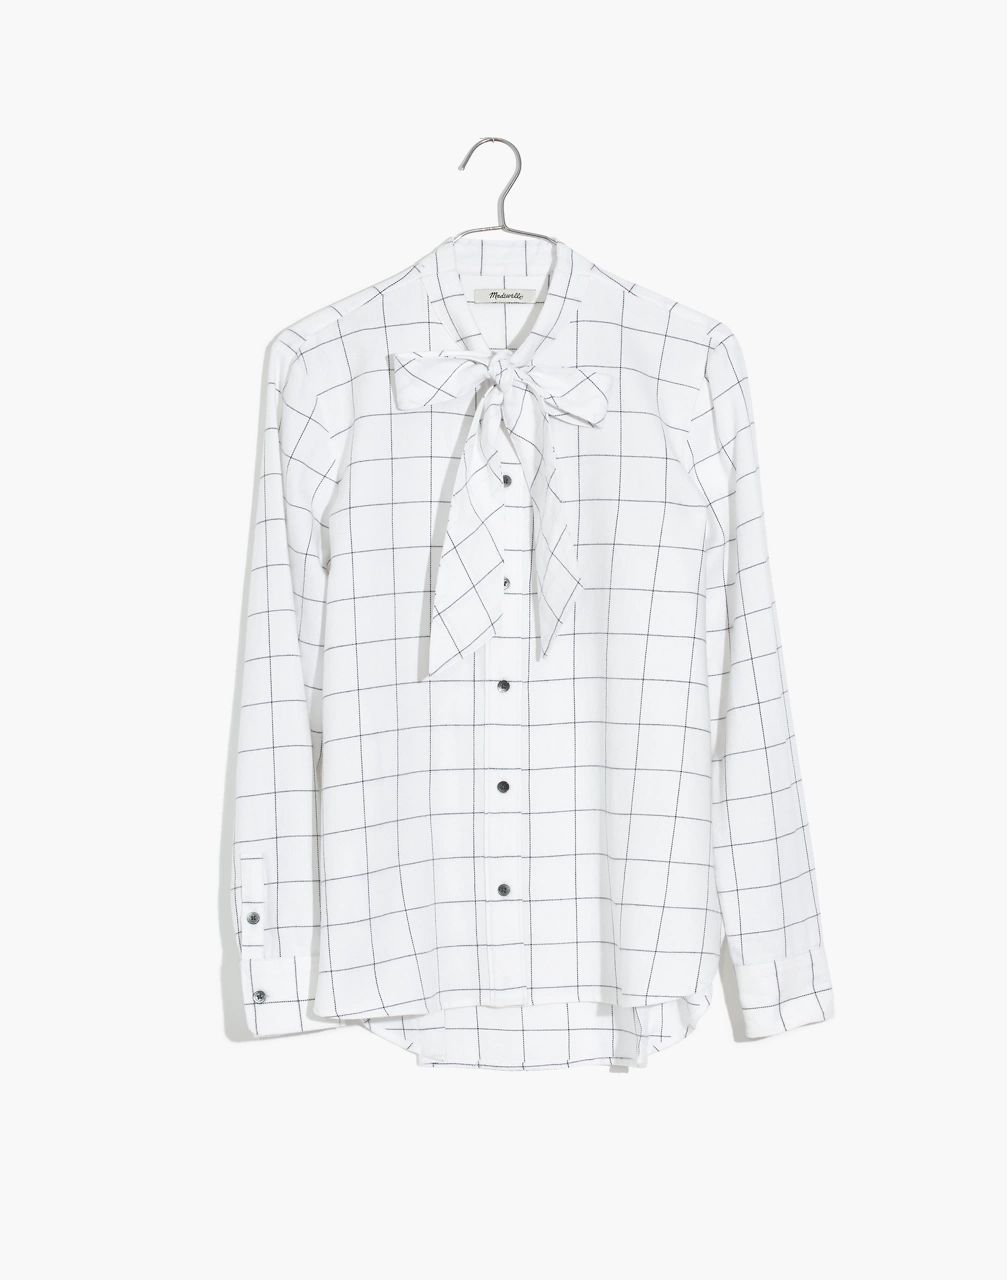 Flannel Tie-Neck Shirt in Windowpane | Madewell